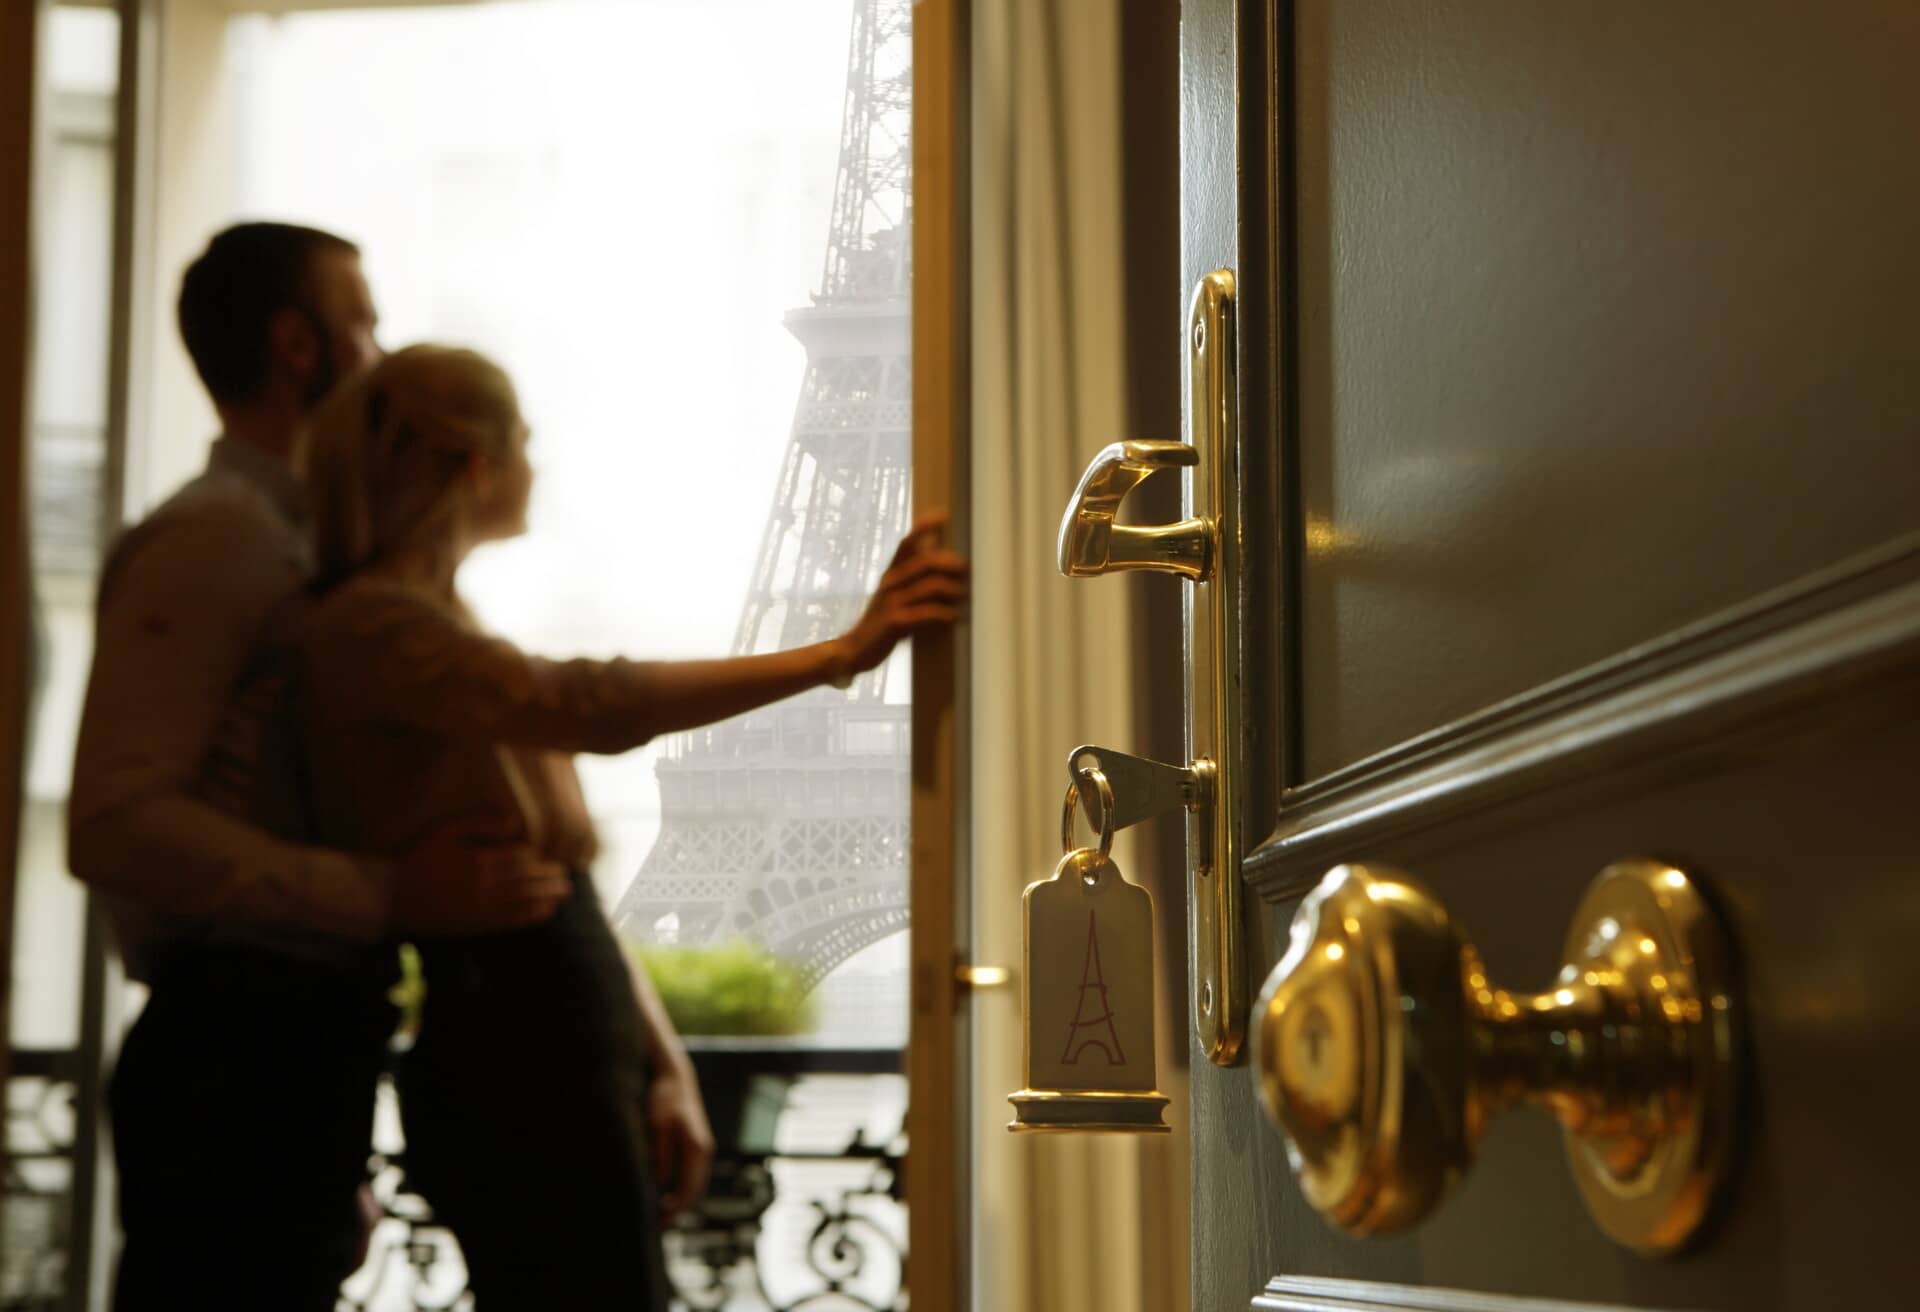 Paris Couple in the Hotel Window